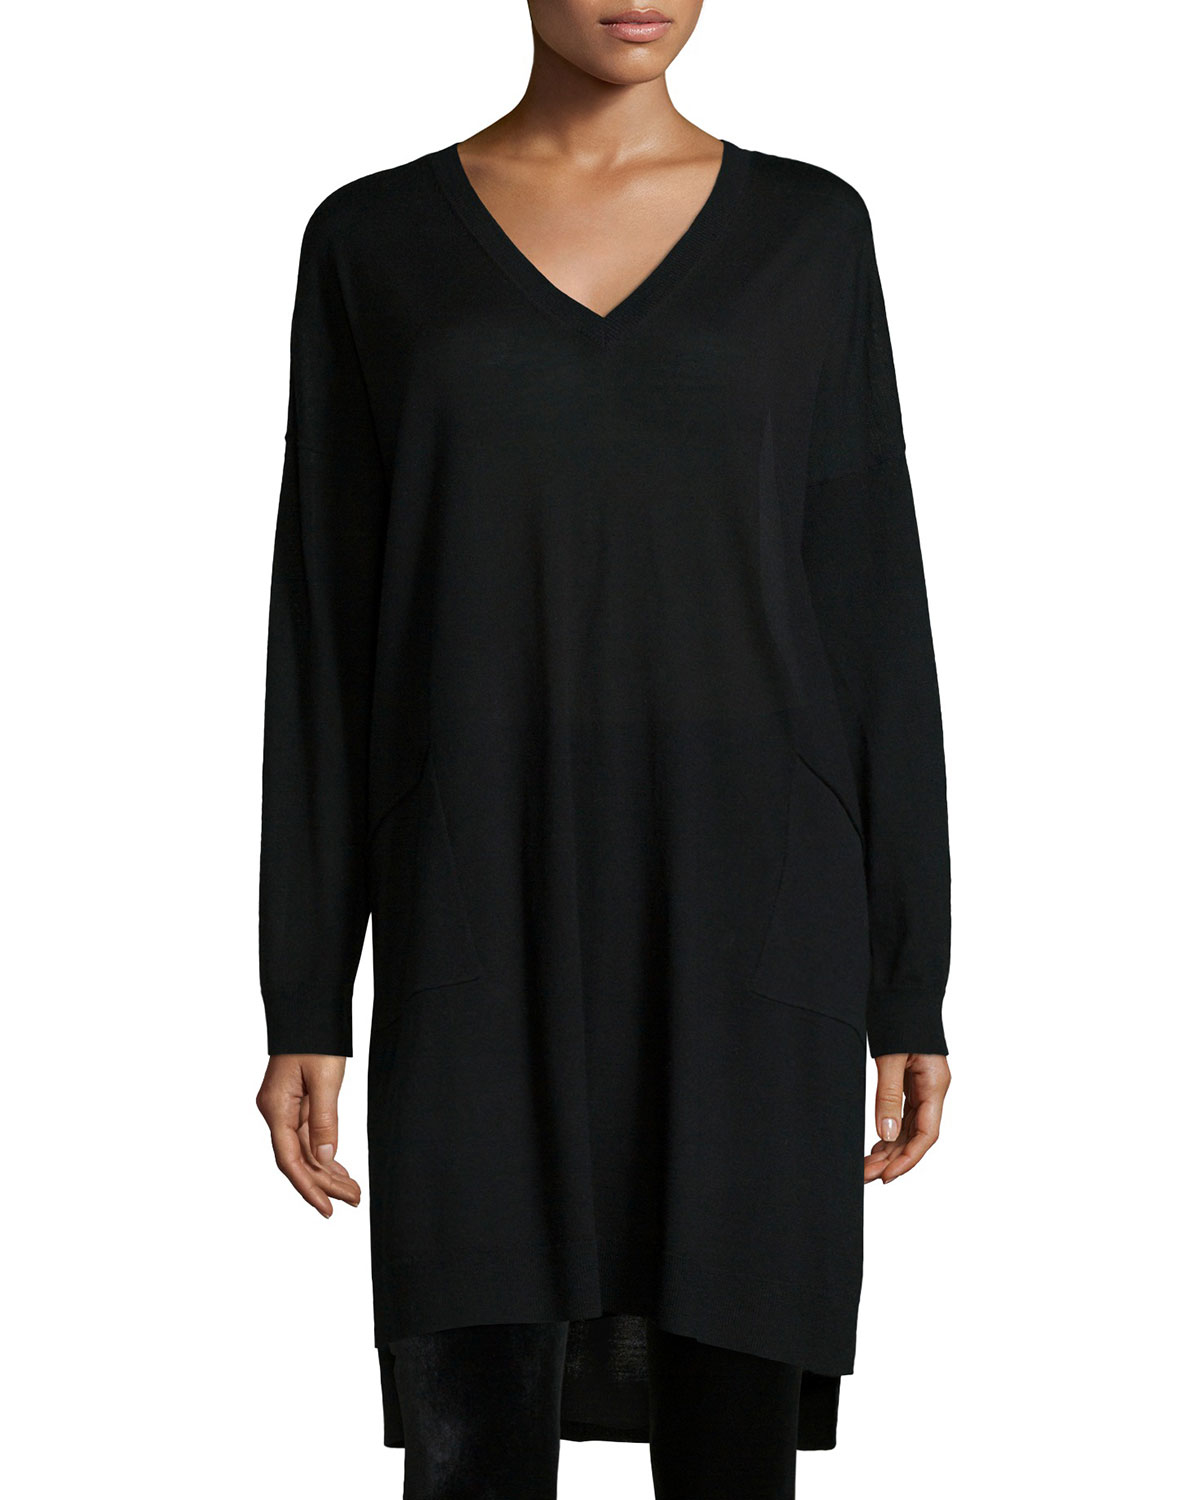 Lyst - Eileen Fisher Long-sleeve V-neck Jersey Dress in Black